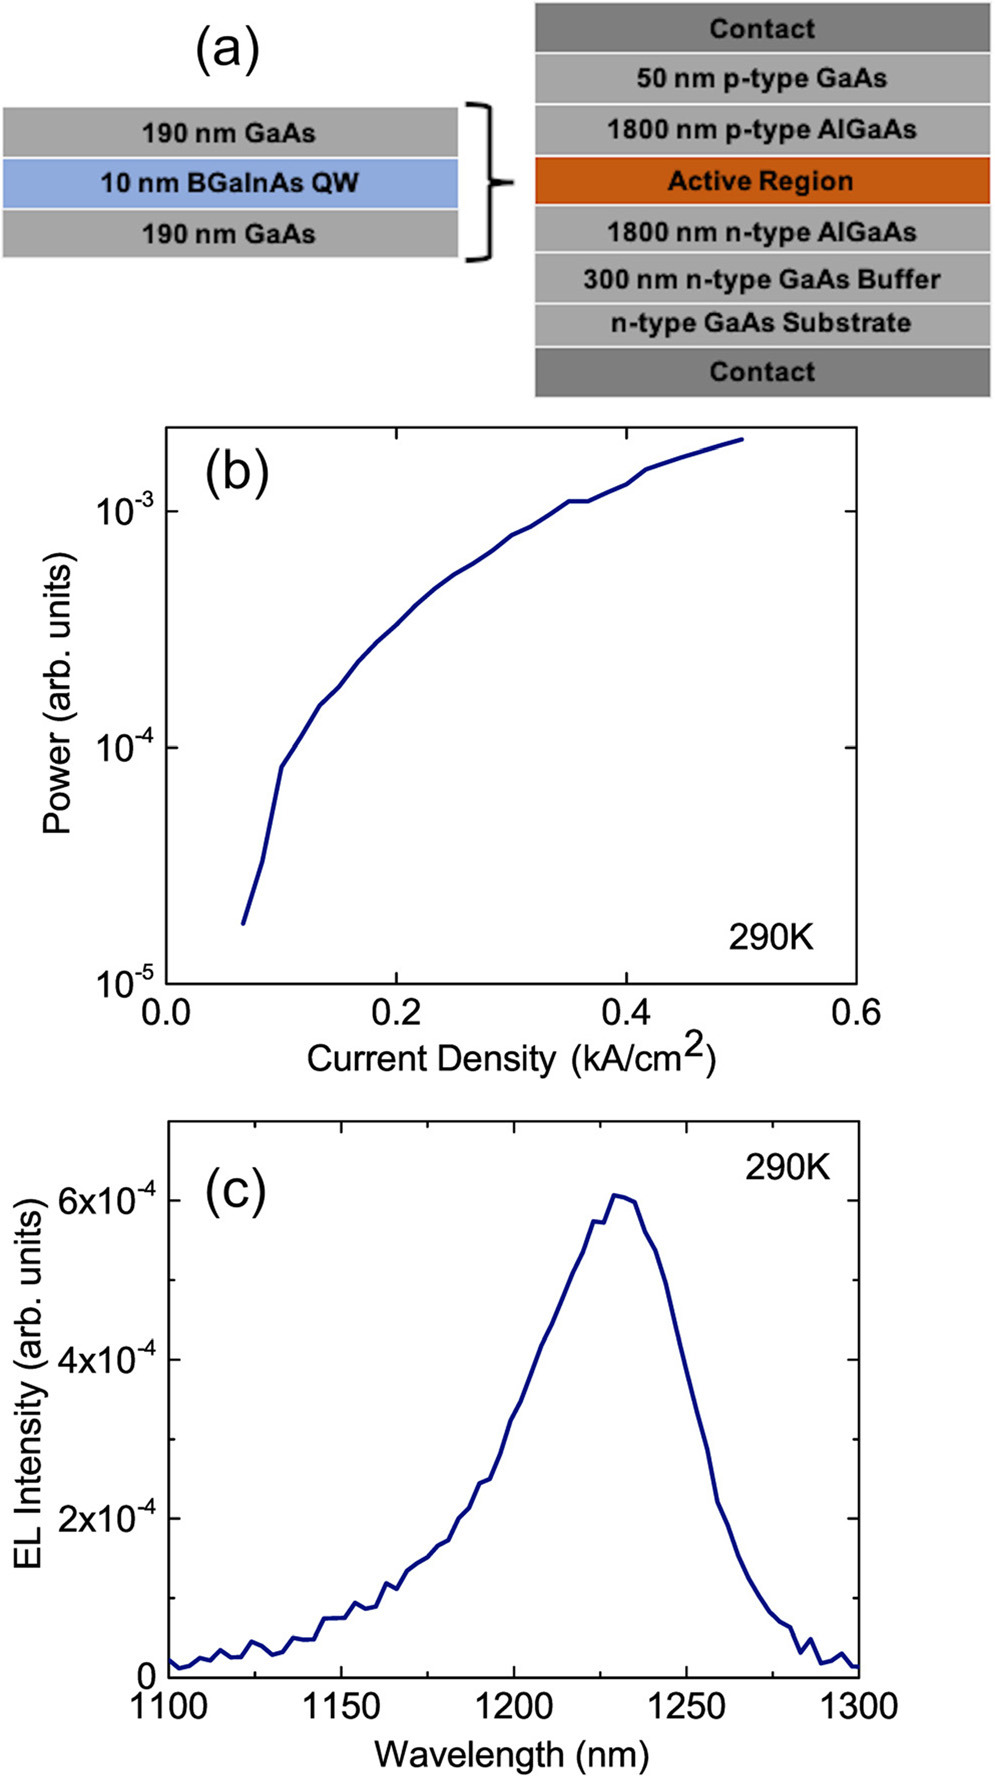 Figure 2: (a) EL structure with BGaInAs QW active region. (b) Light output versus input current (L-I) curve and (c) emission spectrum at 0.5kA/cm2 current density.